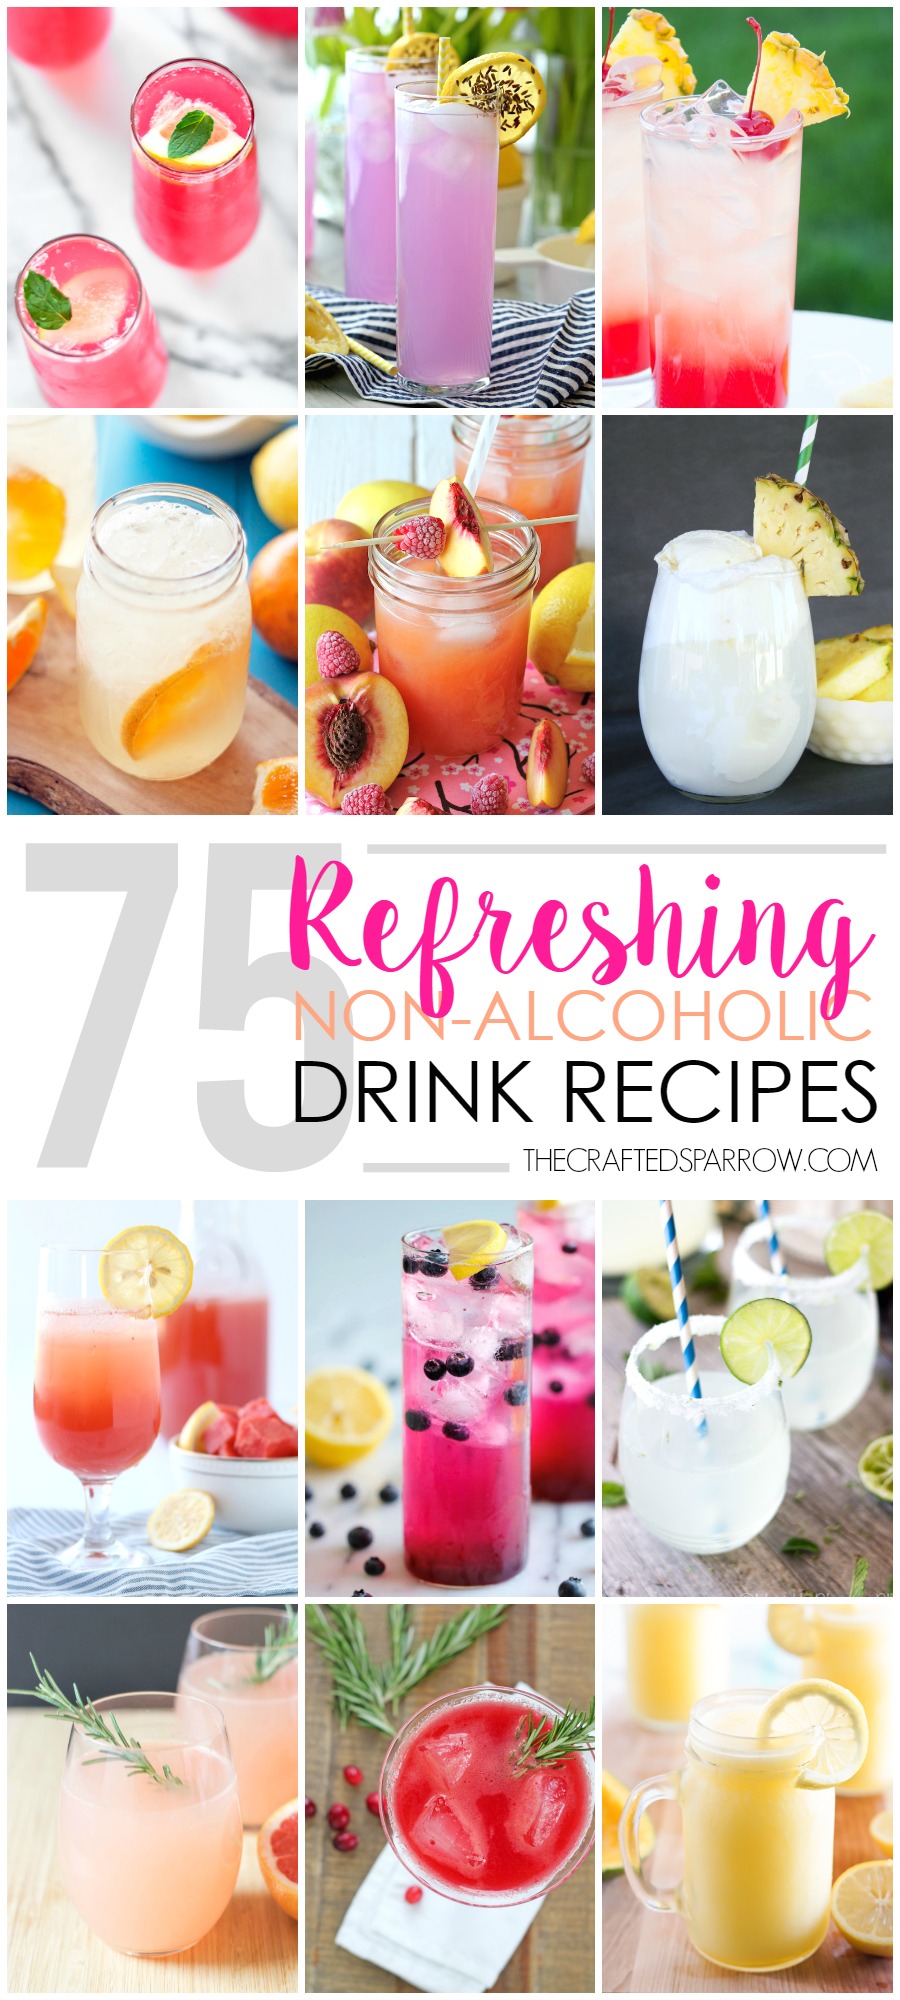 plast depositum Skinnende 75 Refreshing Non-Alcoholic Drink Recipes